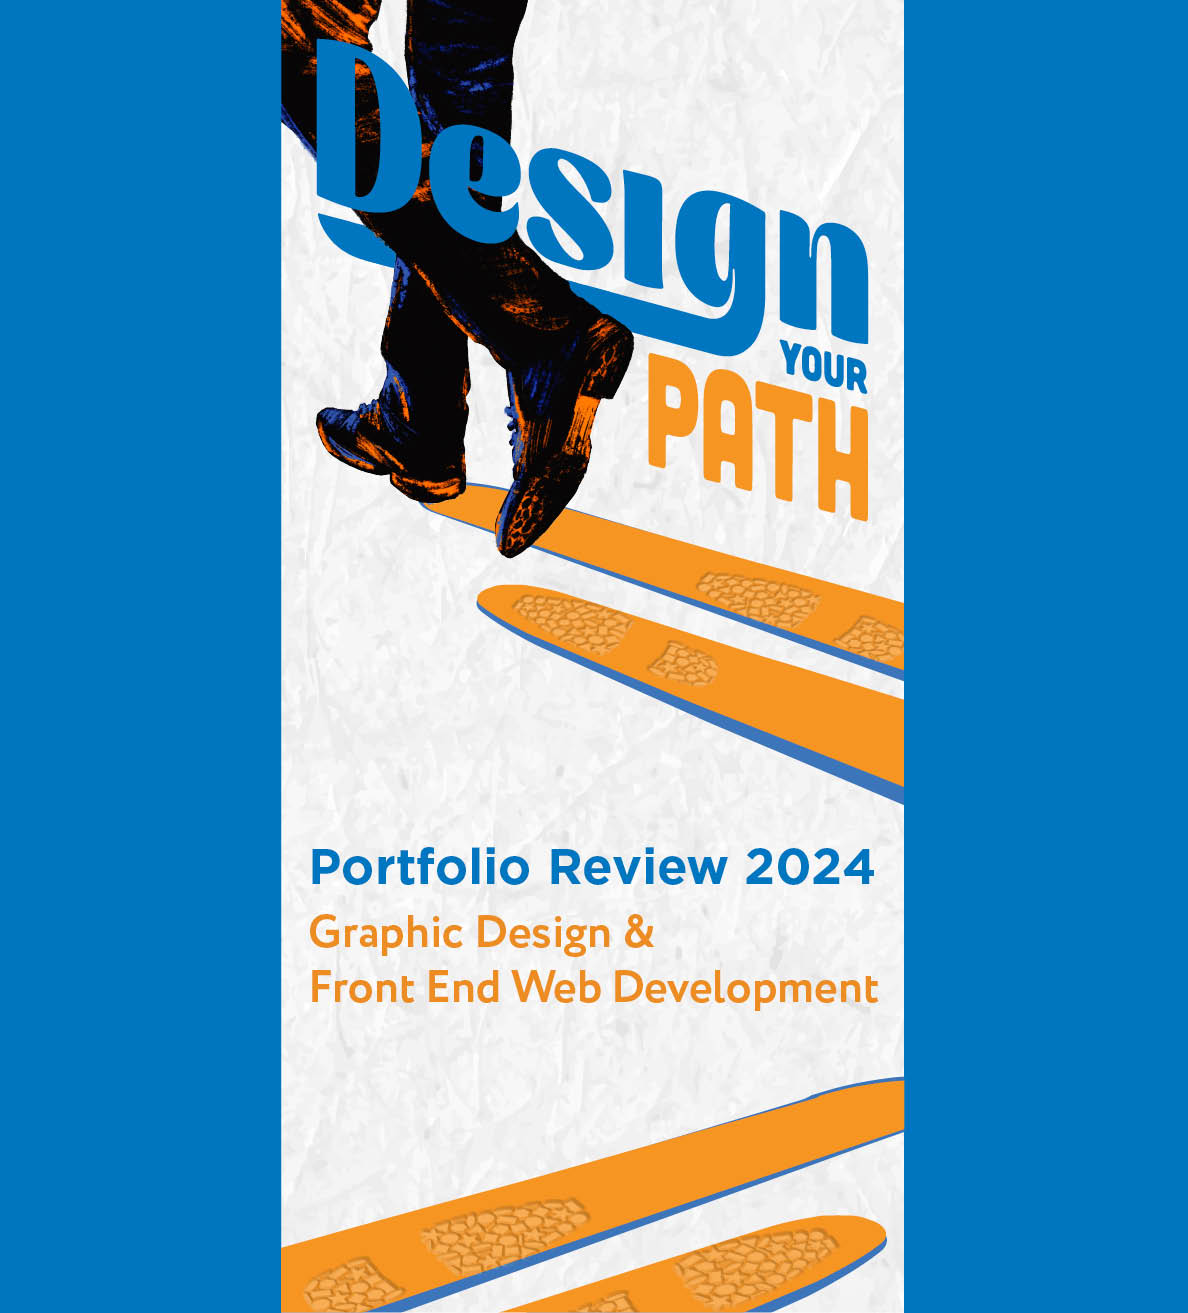 Graphic Design and Front End Web Development Porfolio Review